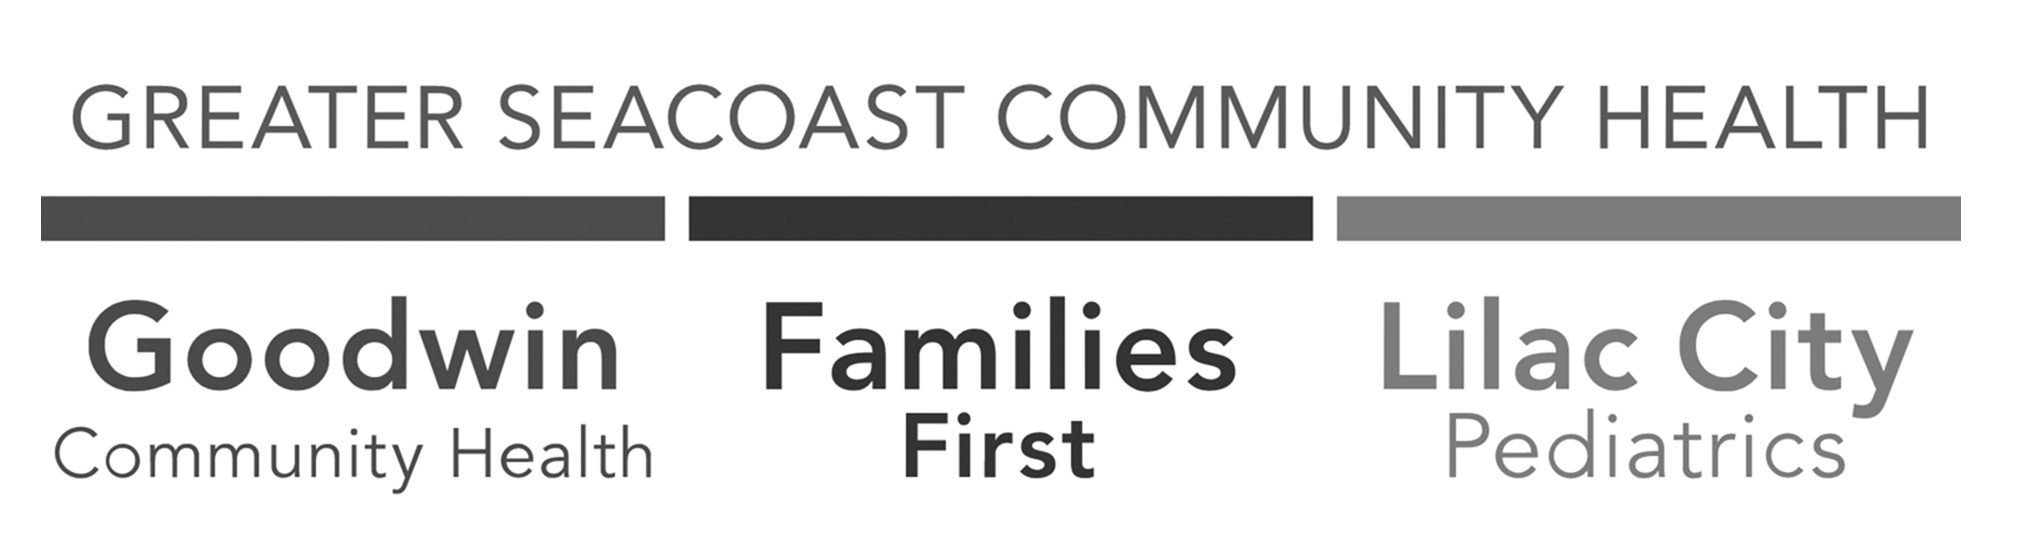 Greater Seacoast Community Health logo gs